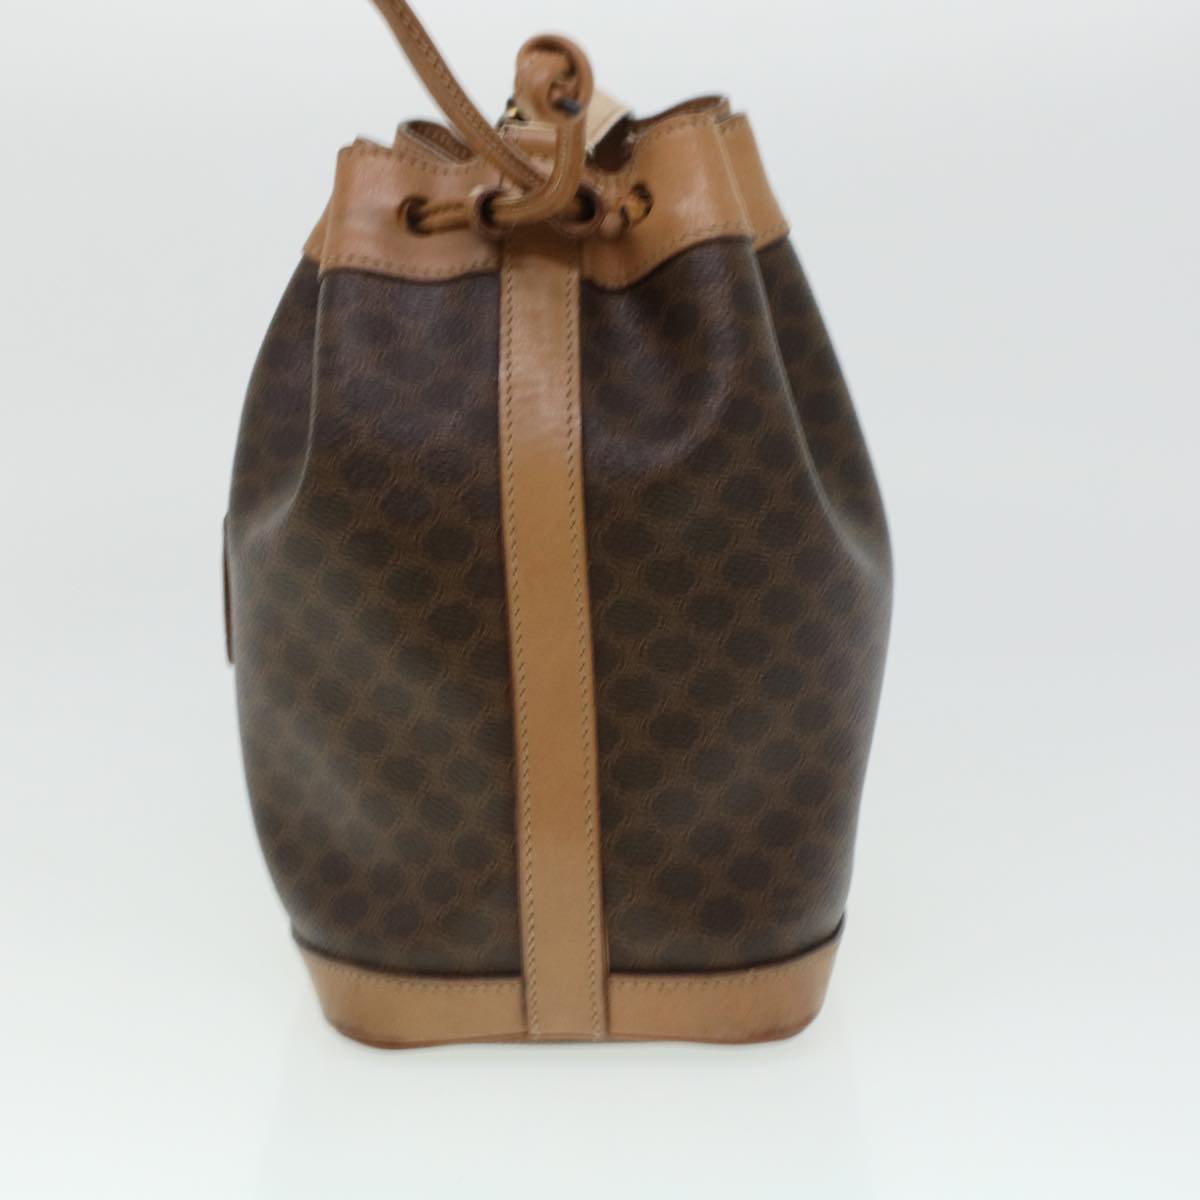 HERMES Gucci Celine GG Macadam Tote Shoulder Bag PVC Leather 3Set Auth am4575